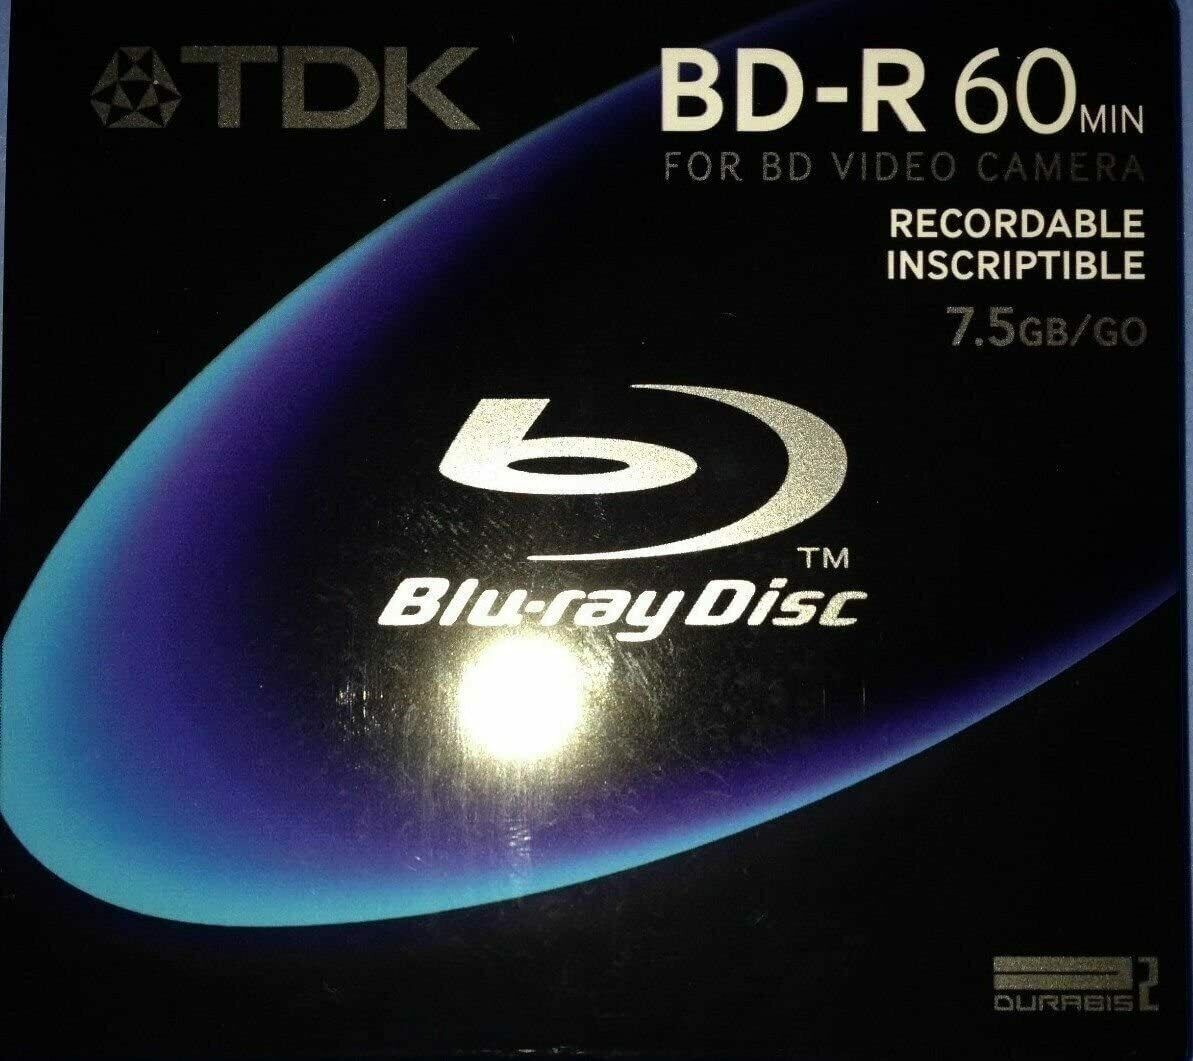 BD-R 60 MIN for BD Video Camera…